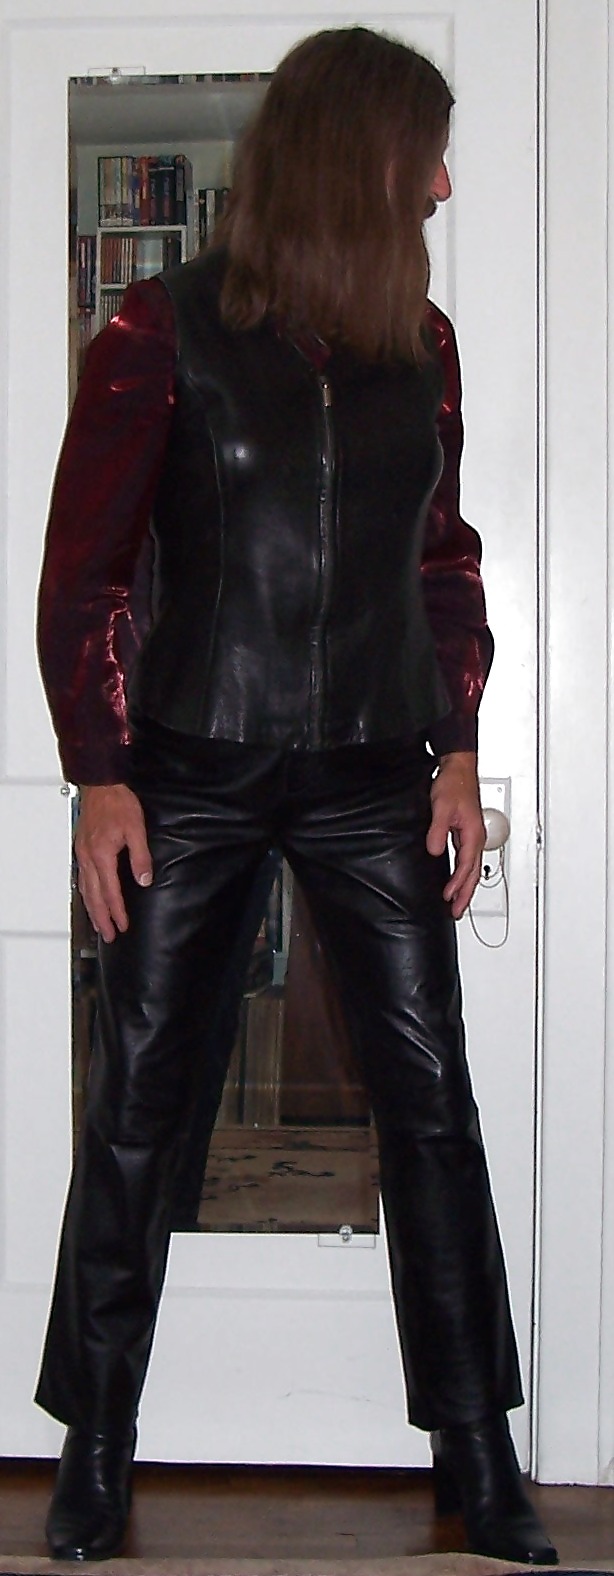 Crossdressing - Leather #2 #11678325